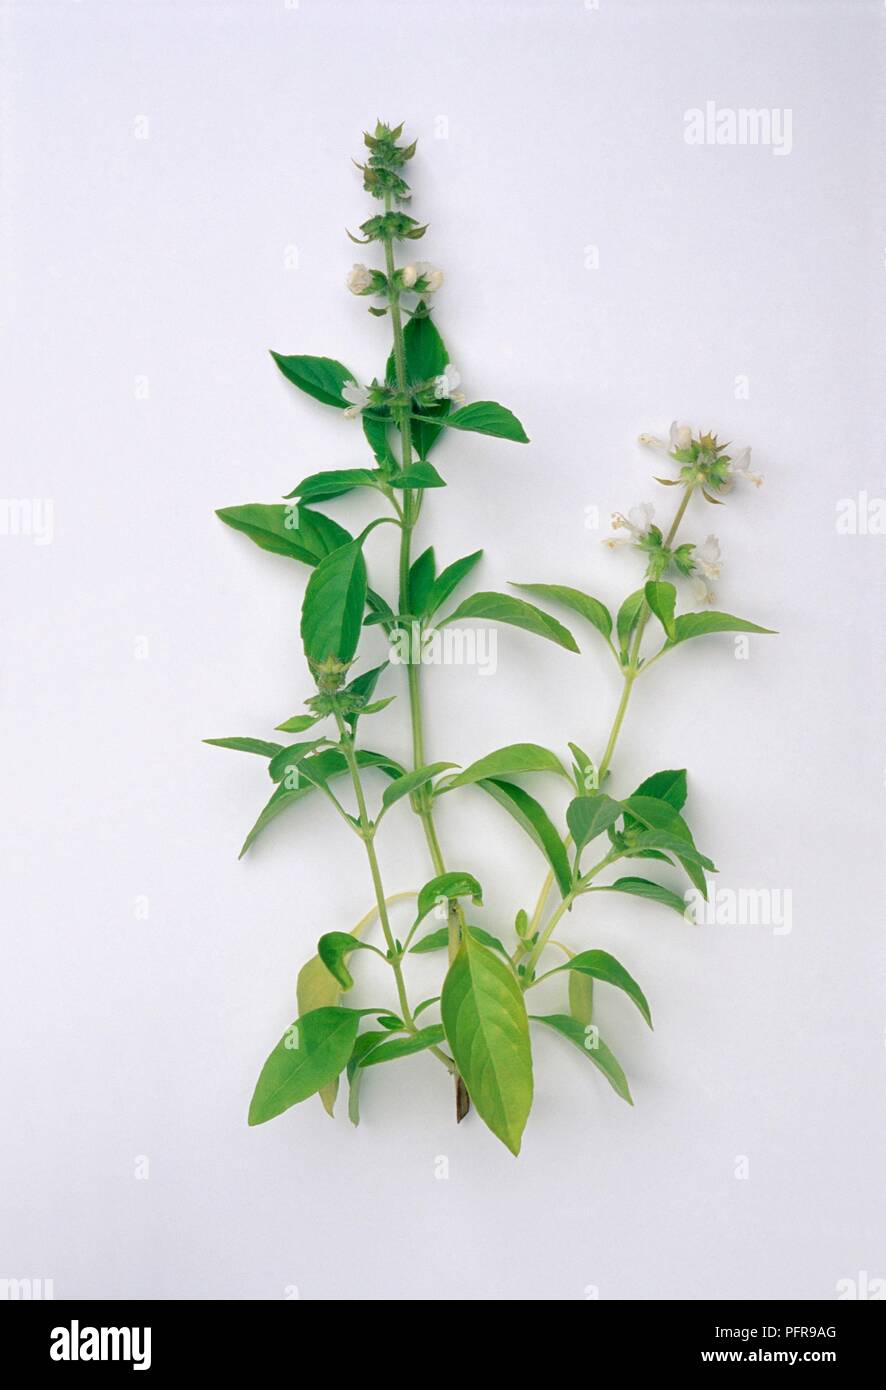 Ocimum basilicum var. citriodorum (Lemon Basil, Indonesian Kemangie), with white flowers and green leaves on long stems Stock Photo